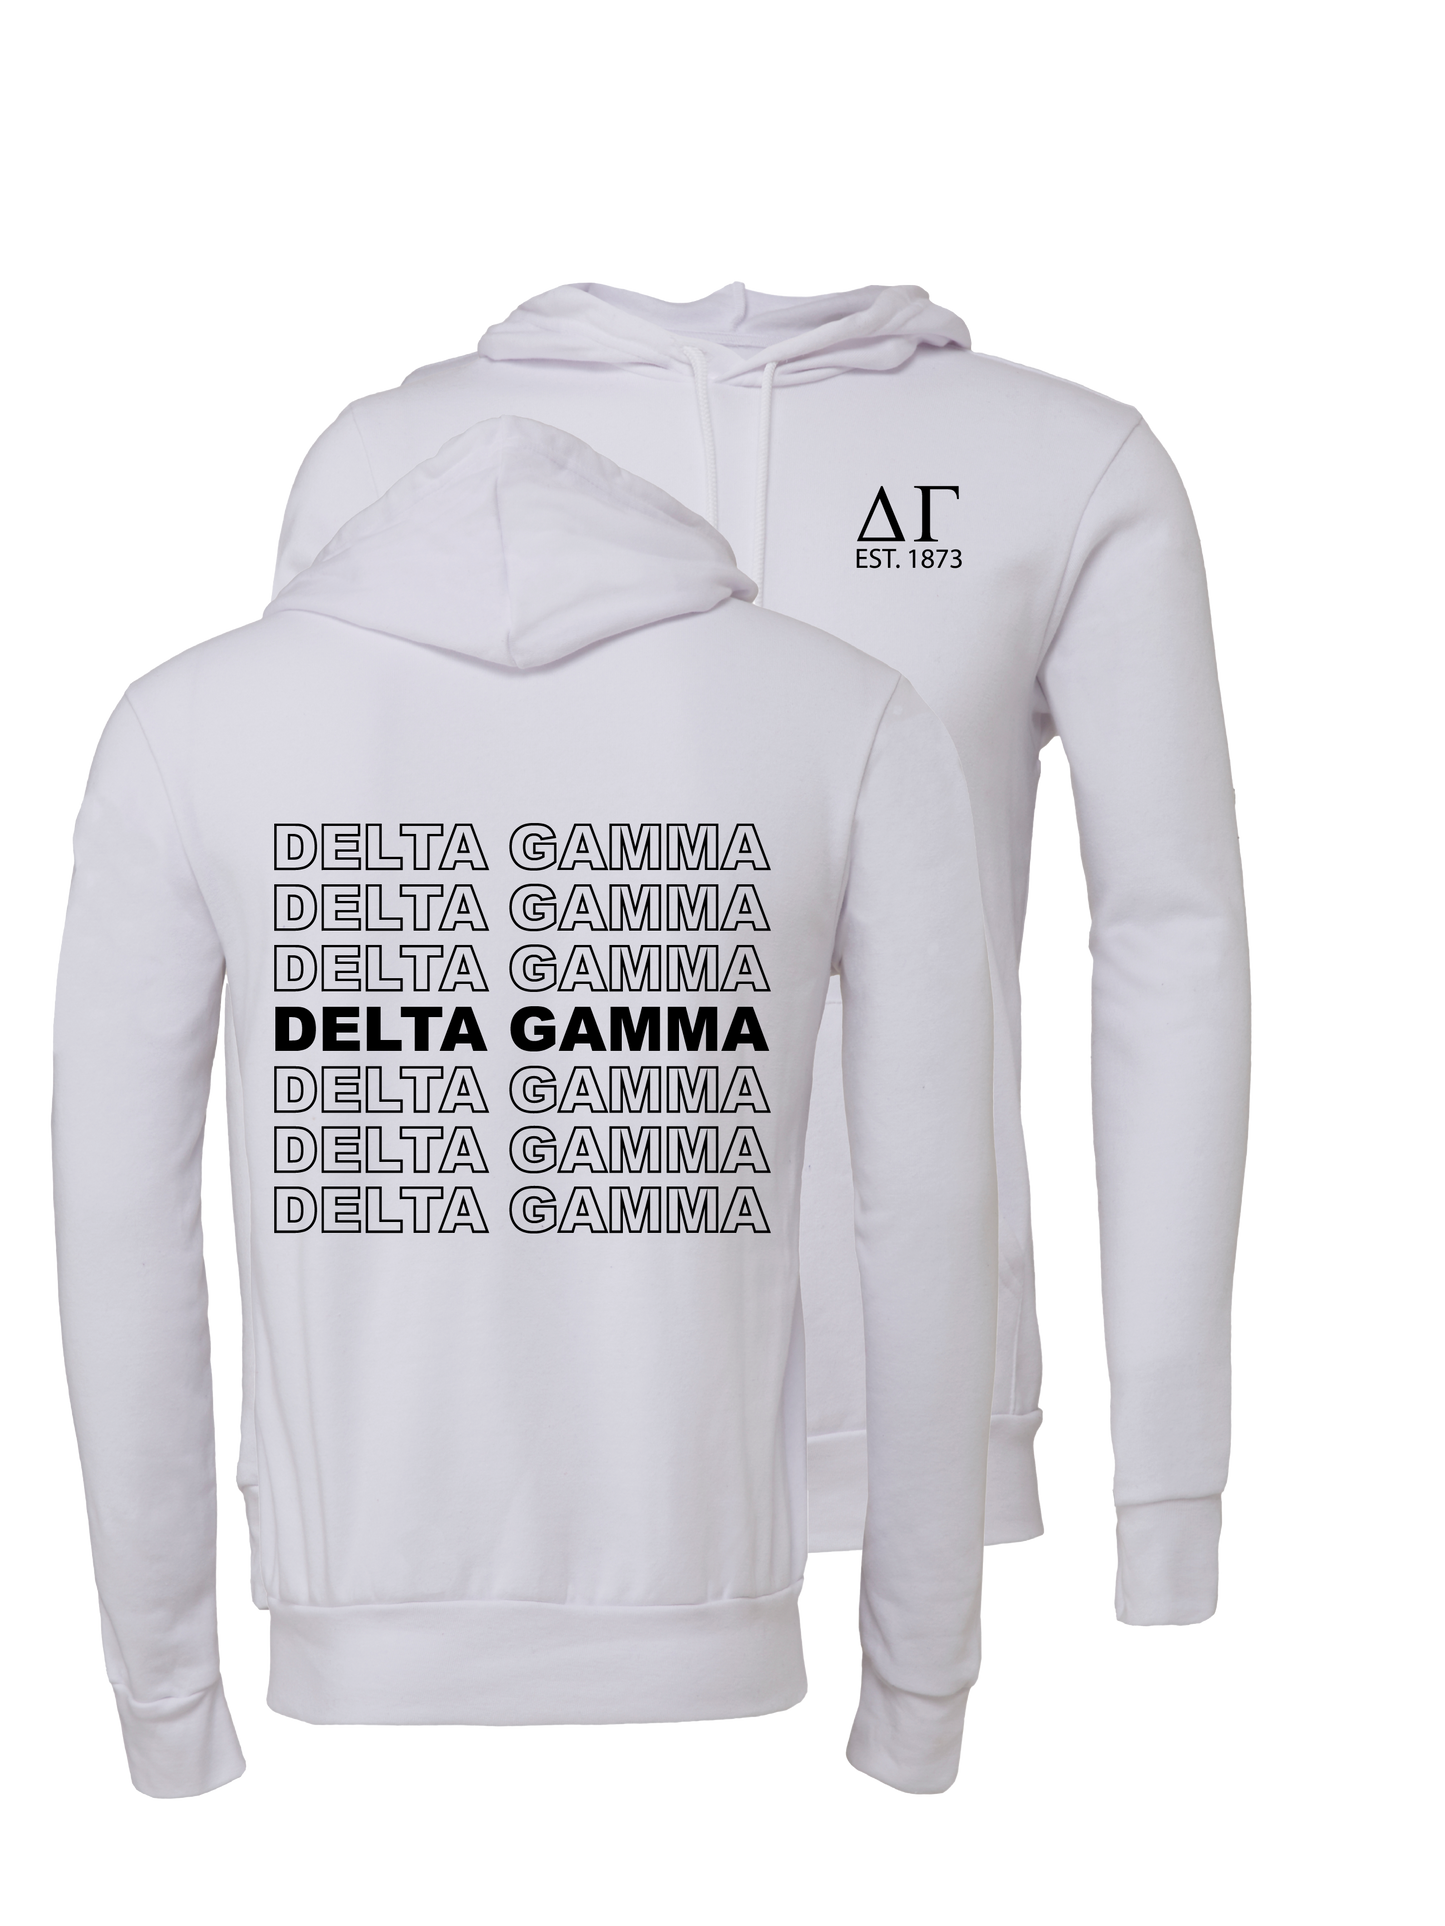 Delta Gamma Repeating Name Hooded Sweatshirts